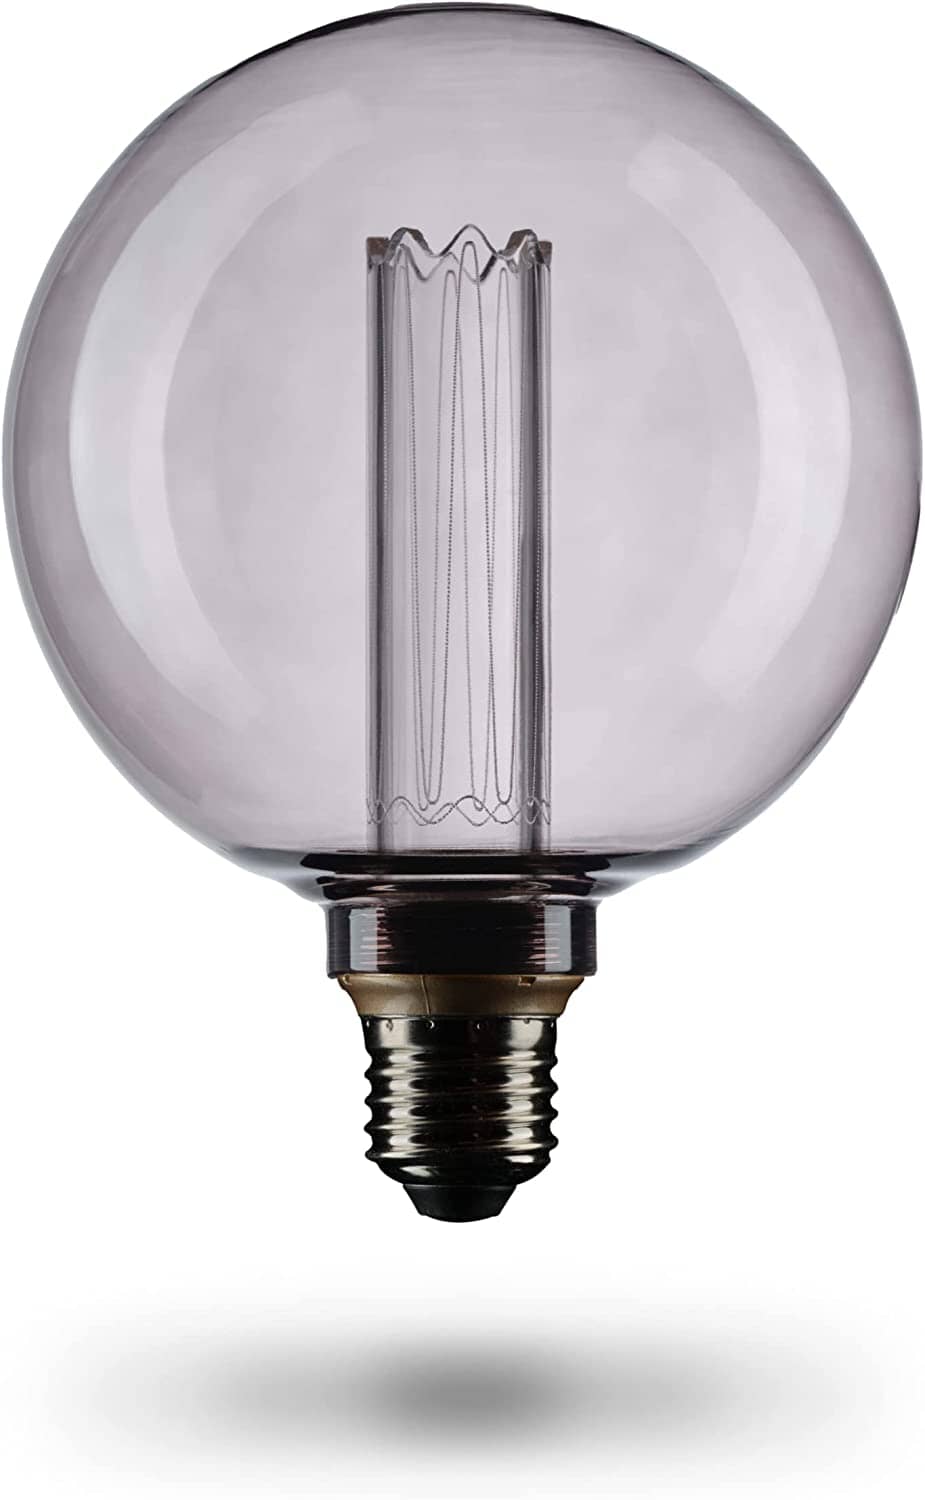 Dimmable Smoky Edison Illusion Lightbulb - 35w 1800k